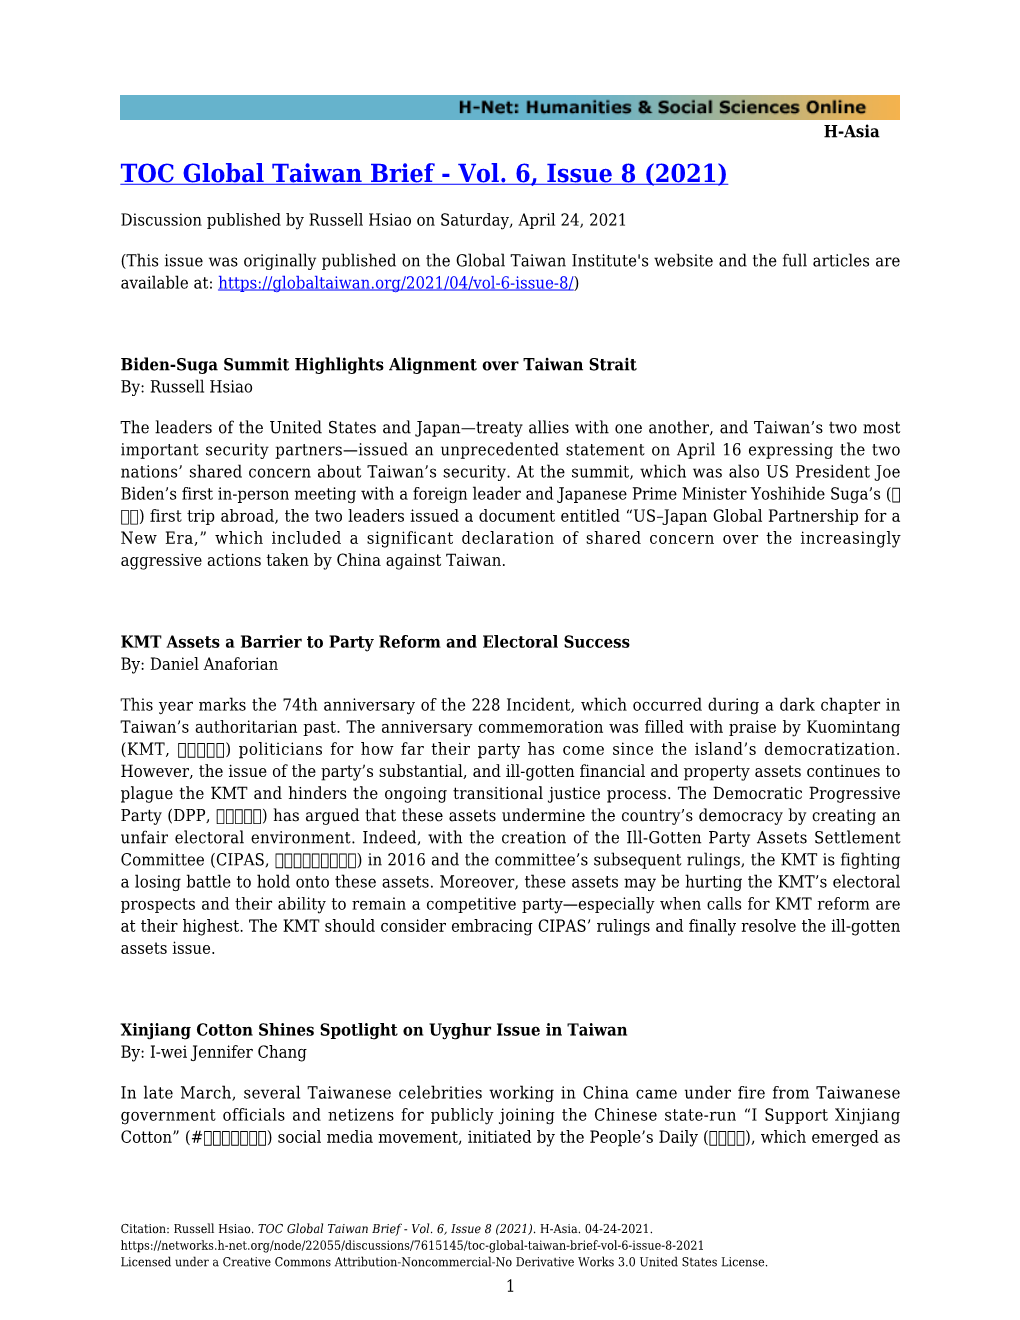 TOC Global Taiwan Brief - Vol